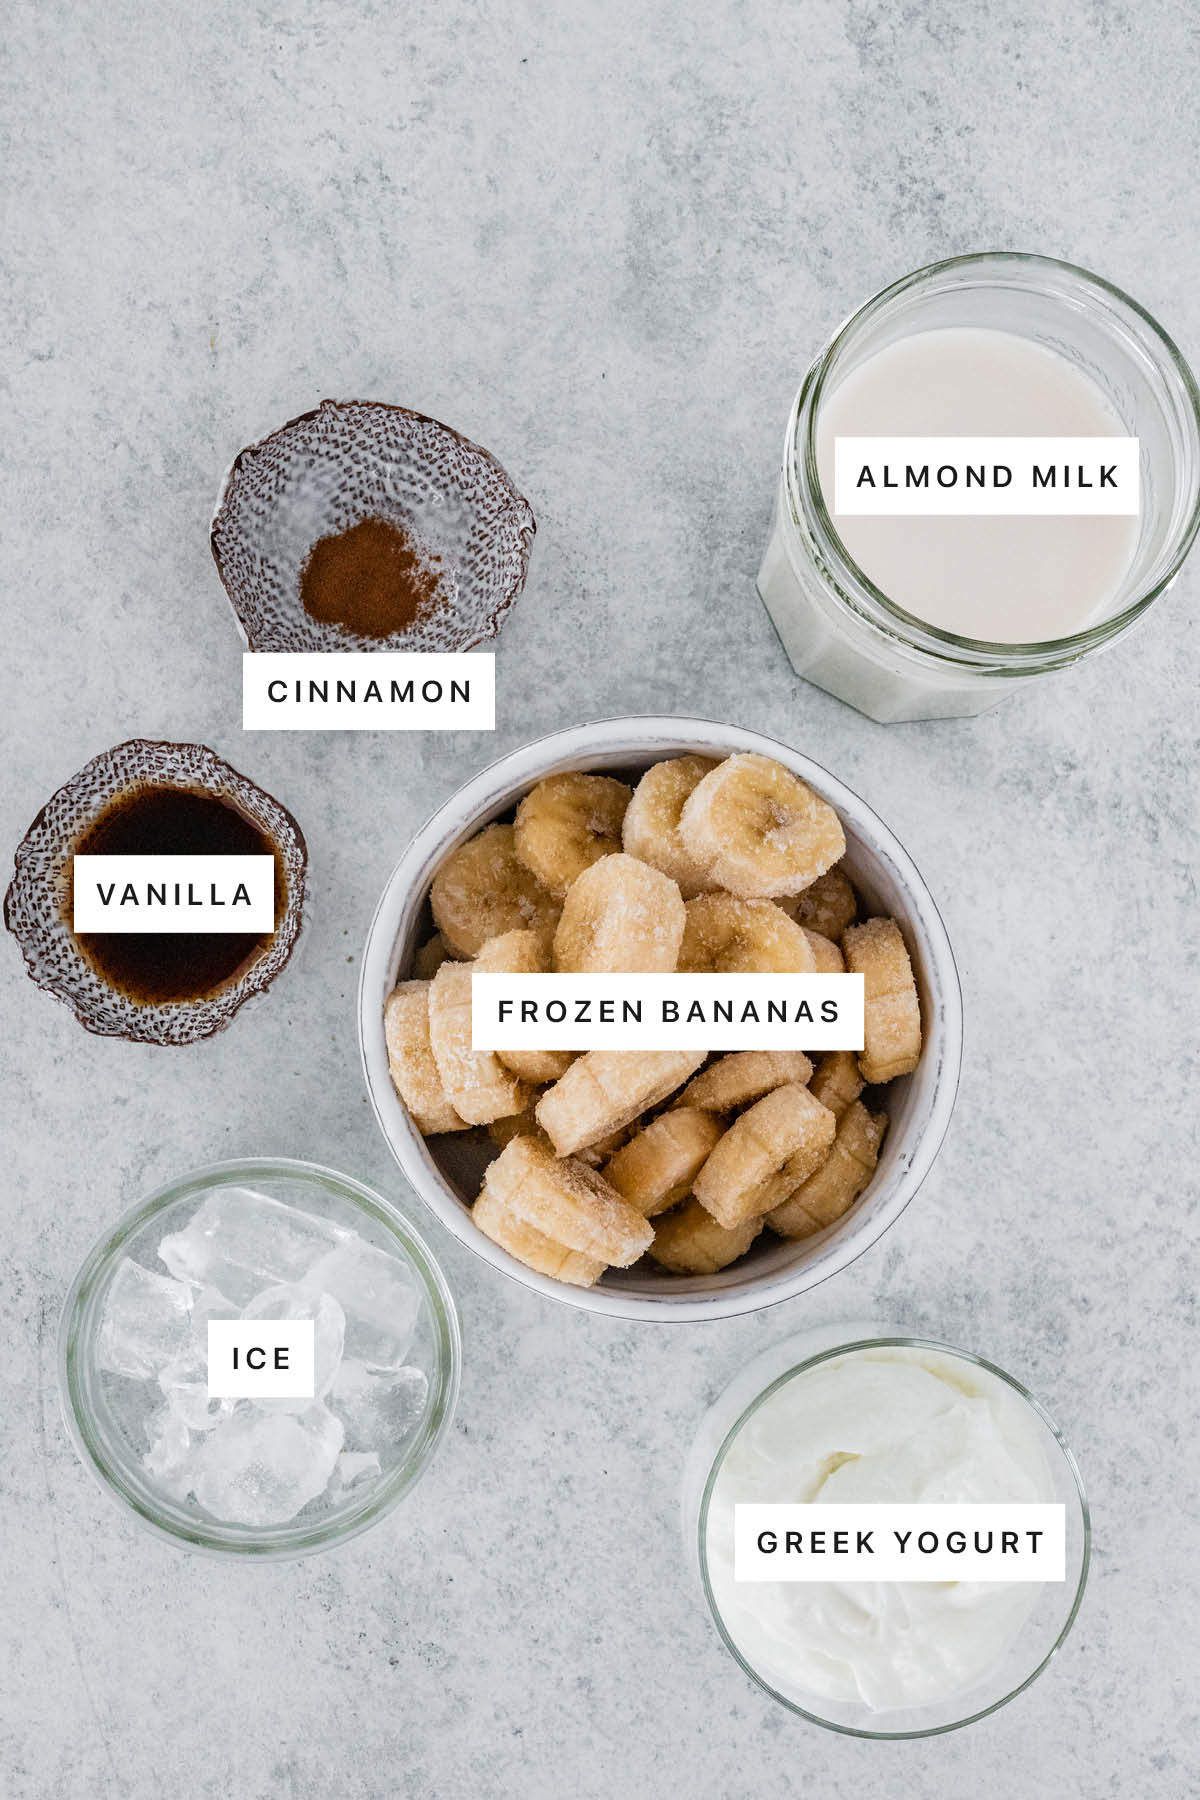 Ingredients measured out to make a Banana Smoothie: cinnamon, almond milk vanilla, frozen bananas, ice and Greek yogurt.